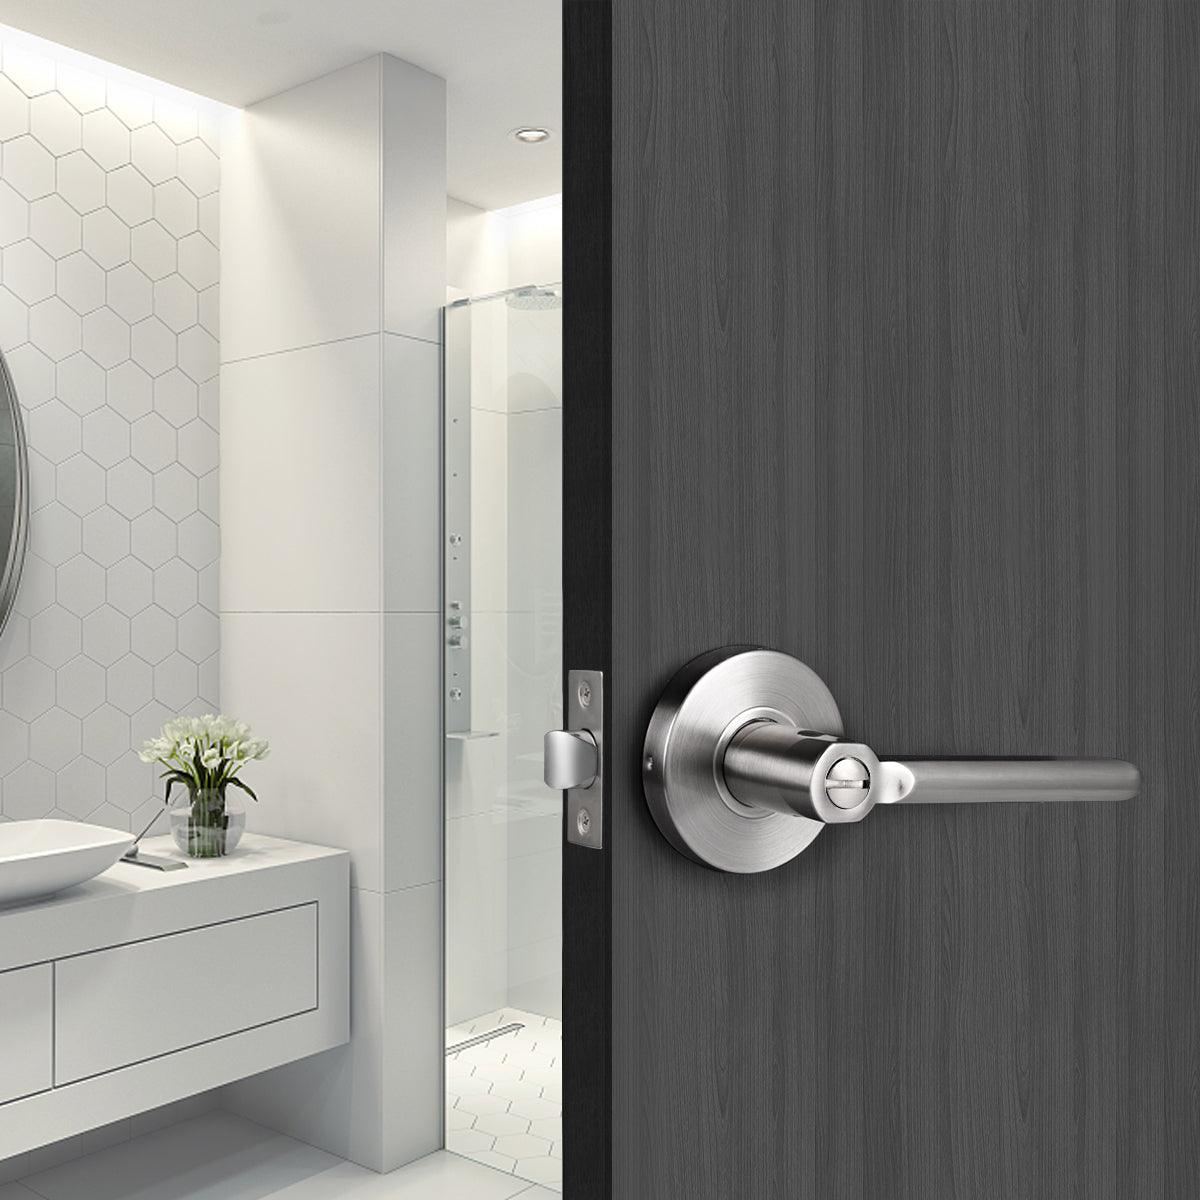 Probrico Door Lever Set Brushed Nickel Finish Interior Bed & Bath Privacy Door Lock DL1637SNBK - Probrico